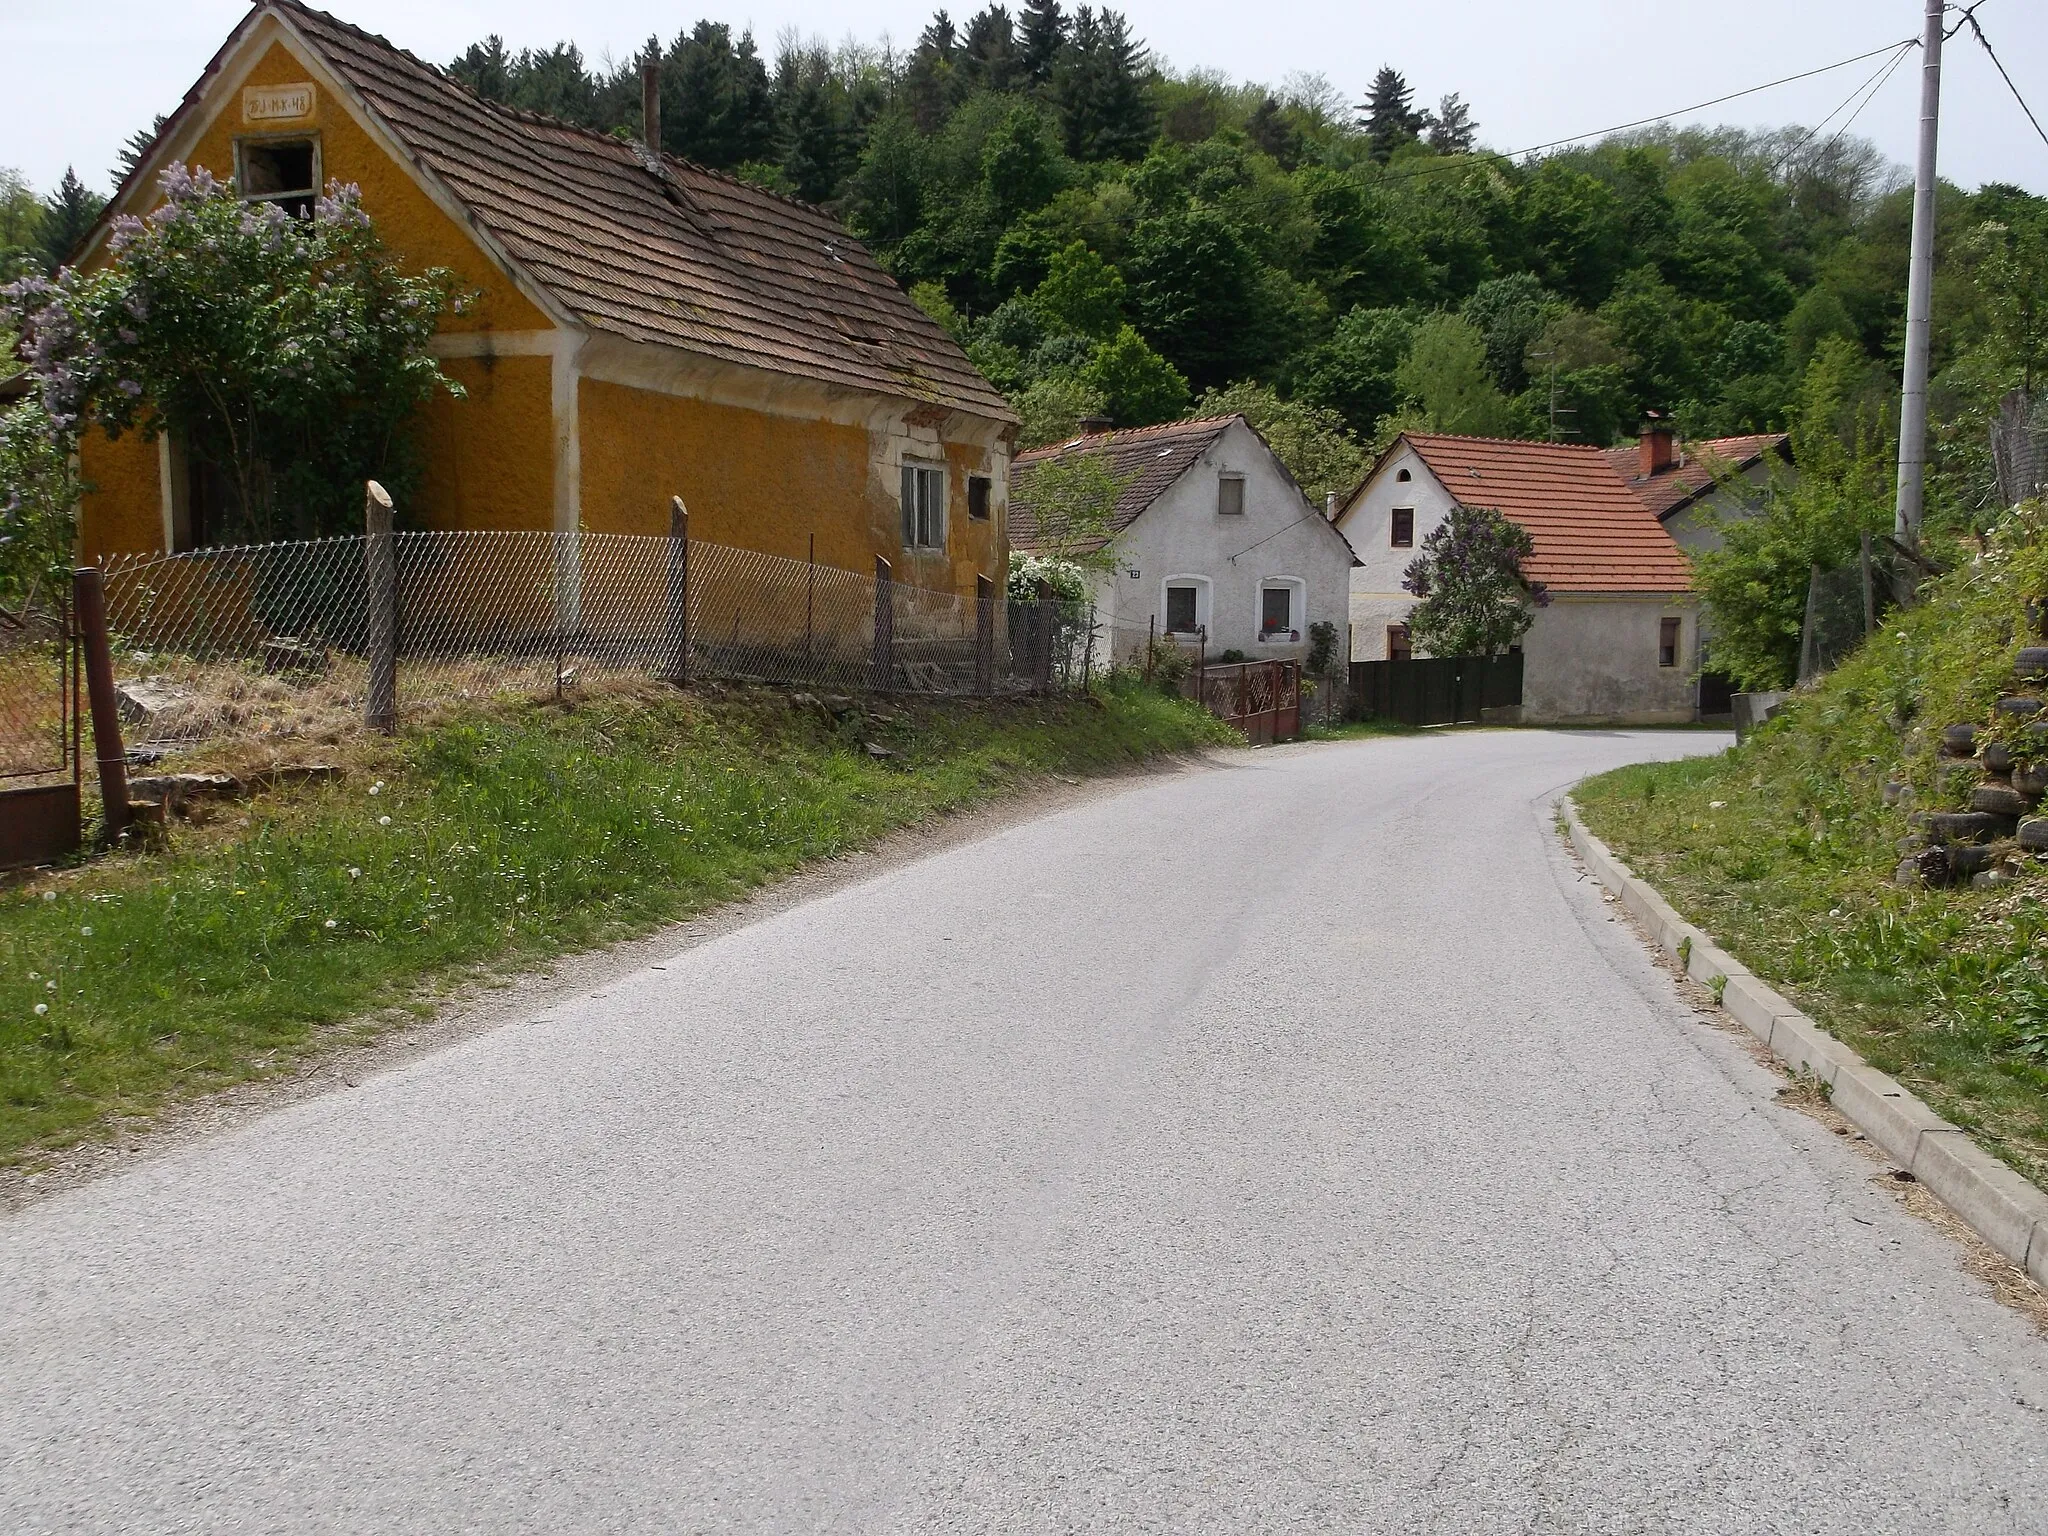 Photo showing: The street of village Vinica, Croatia